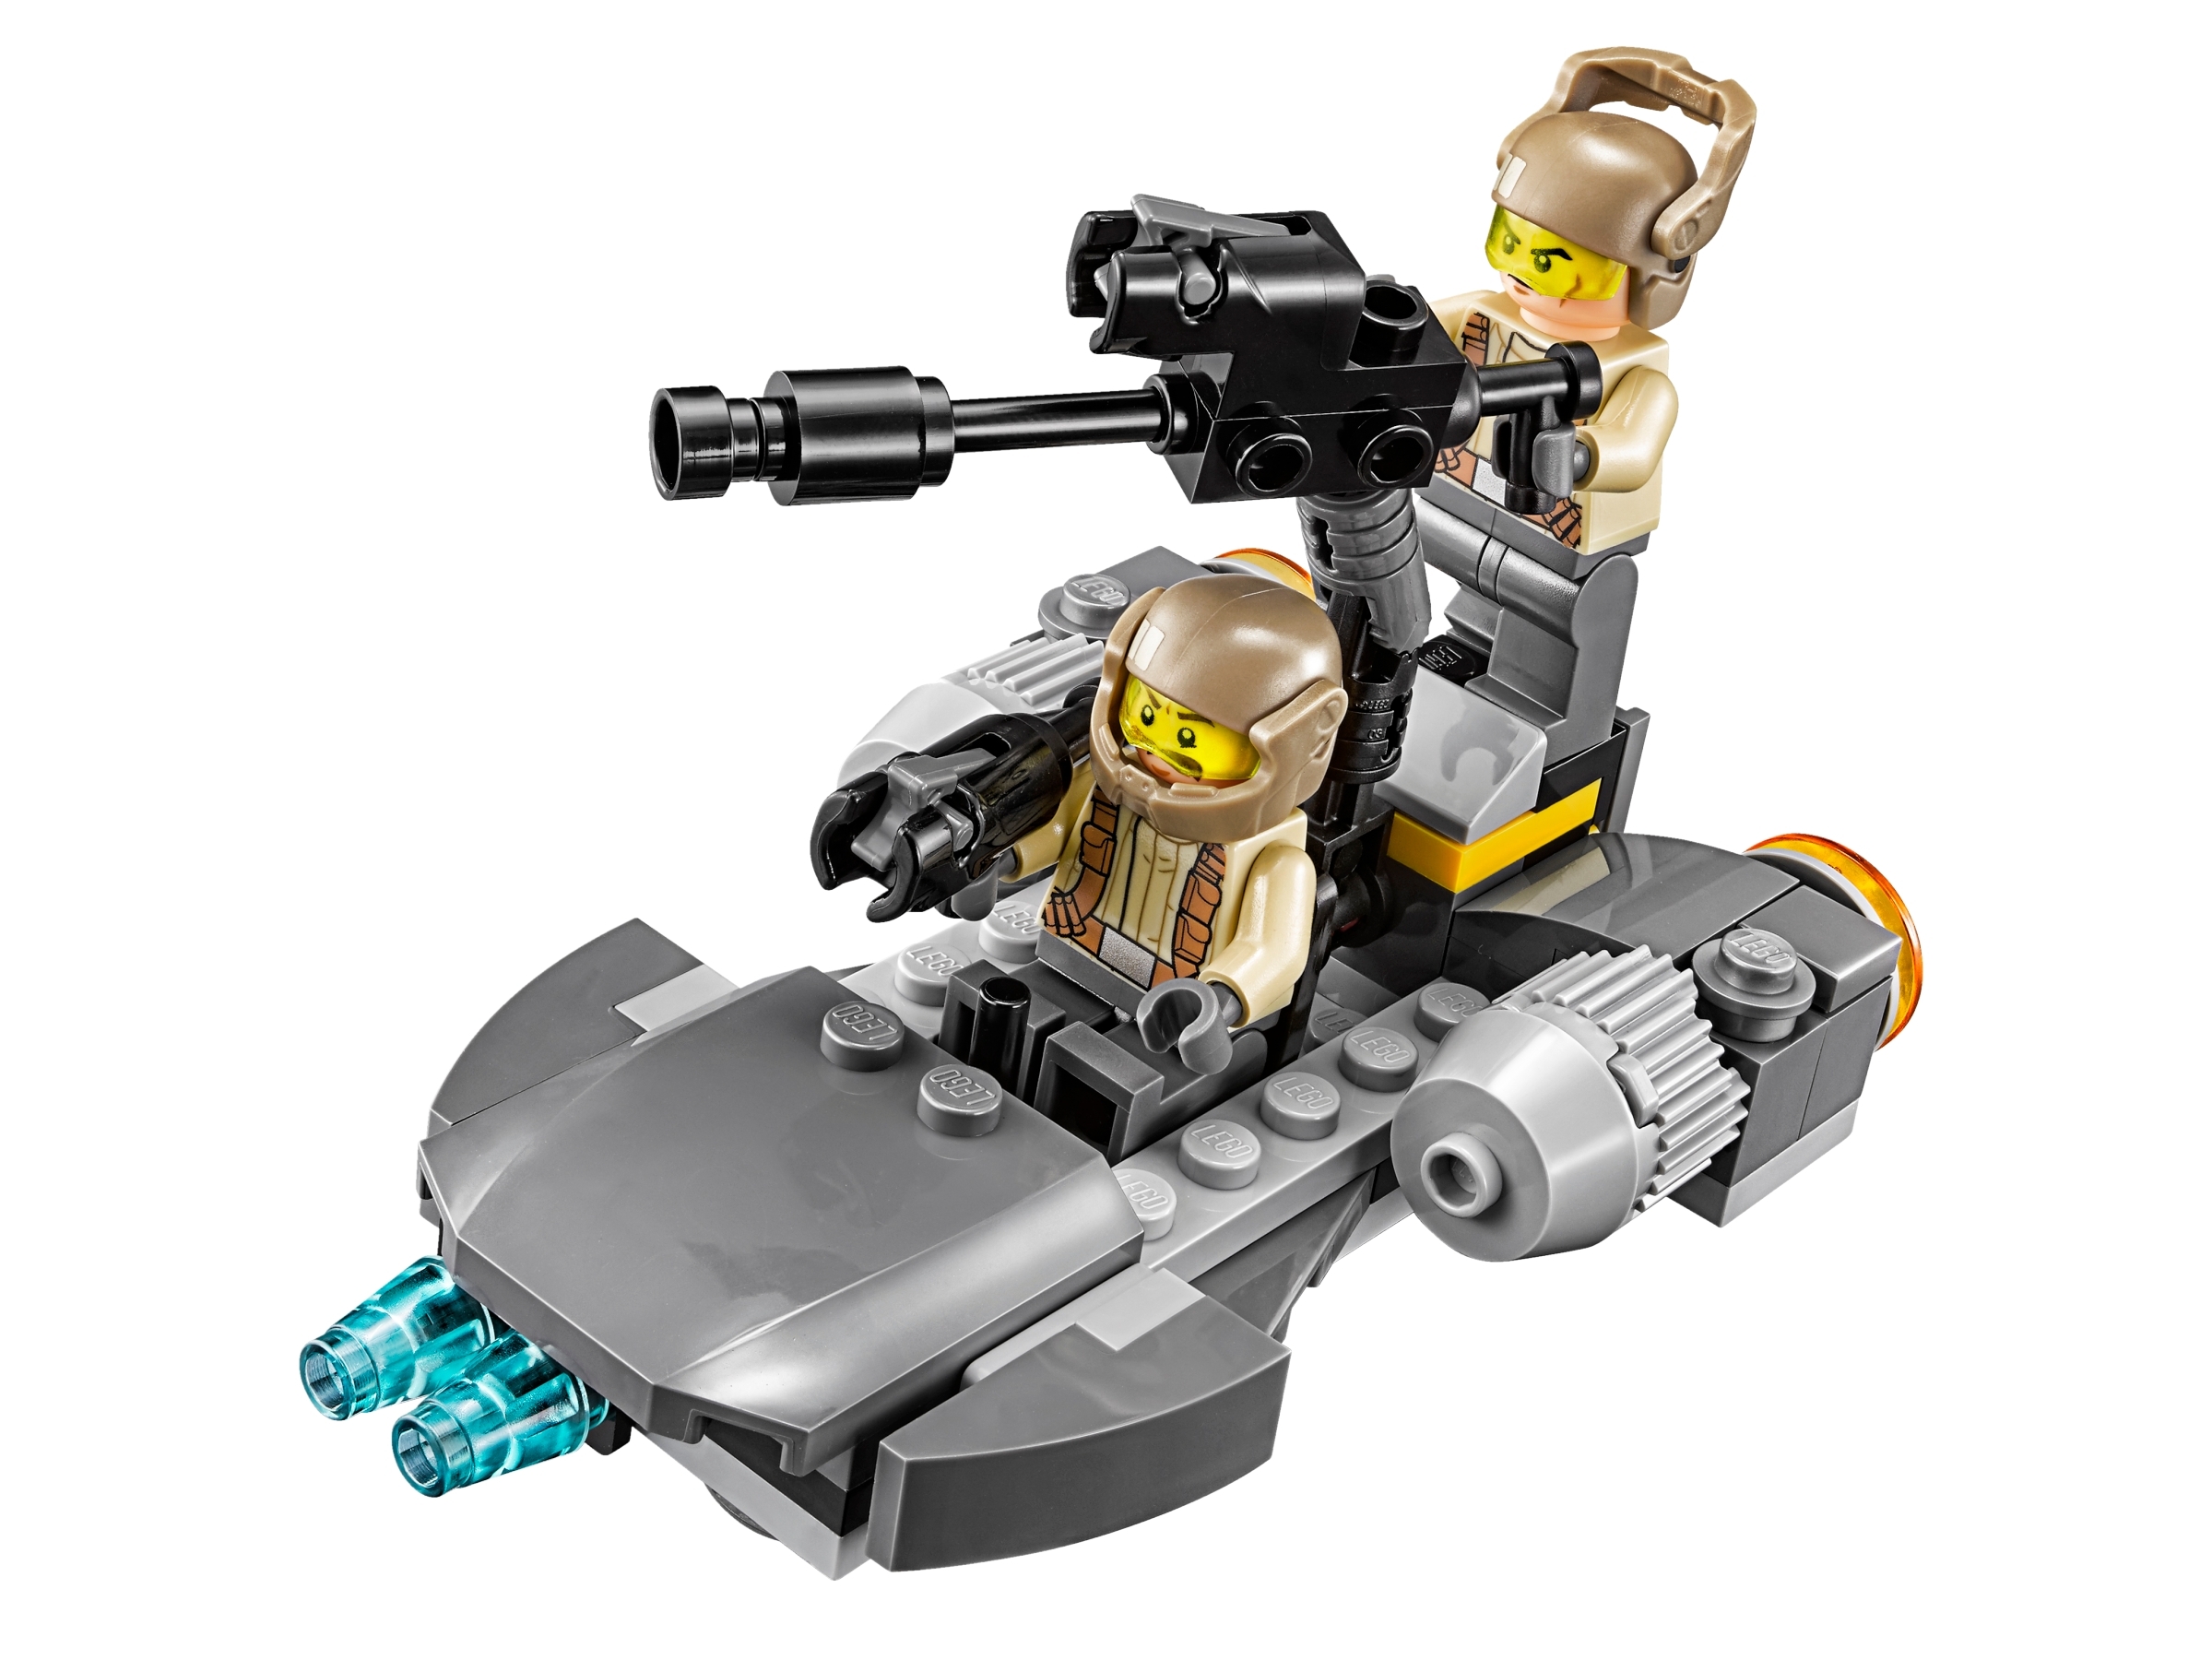 Lego Star Wars Resistance Trooper sw0697 From Set 75131